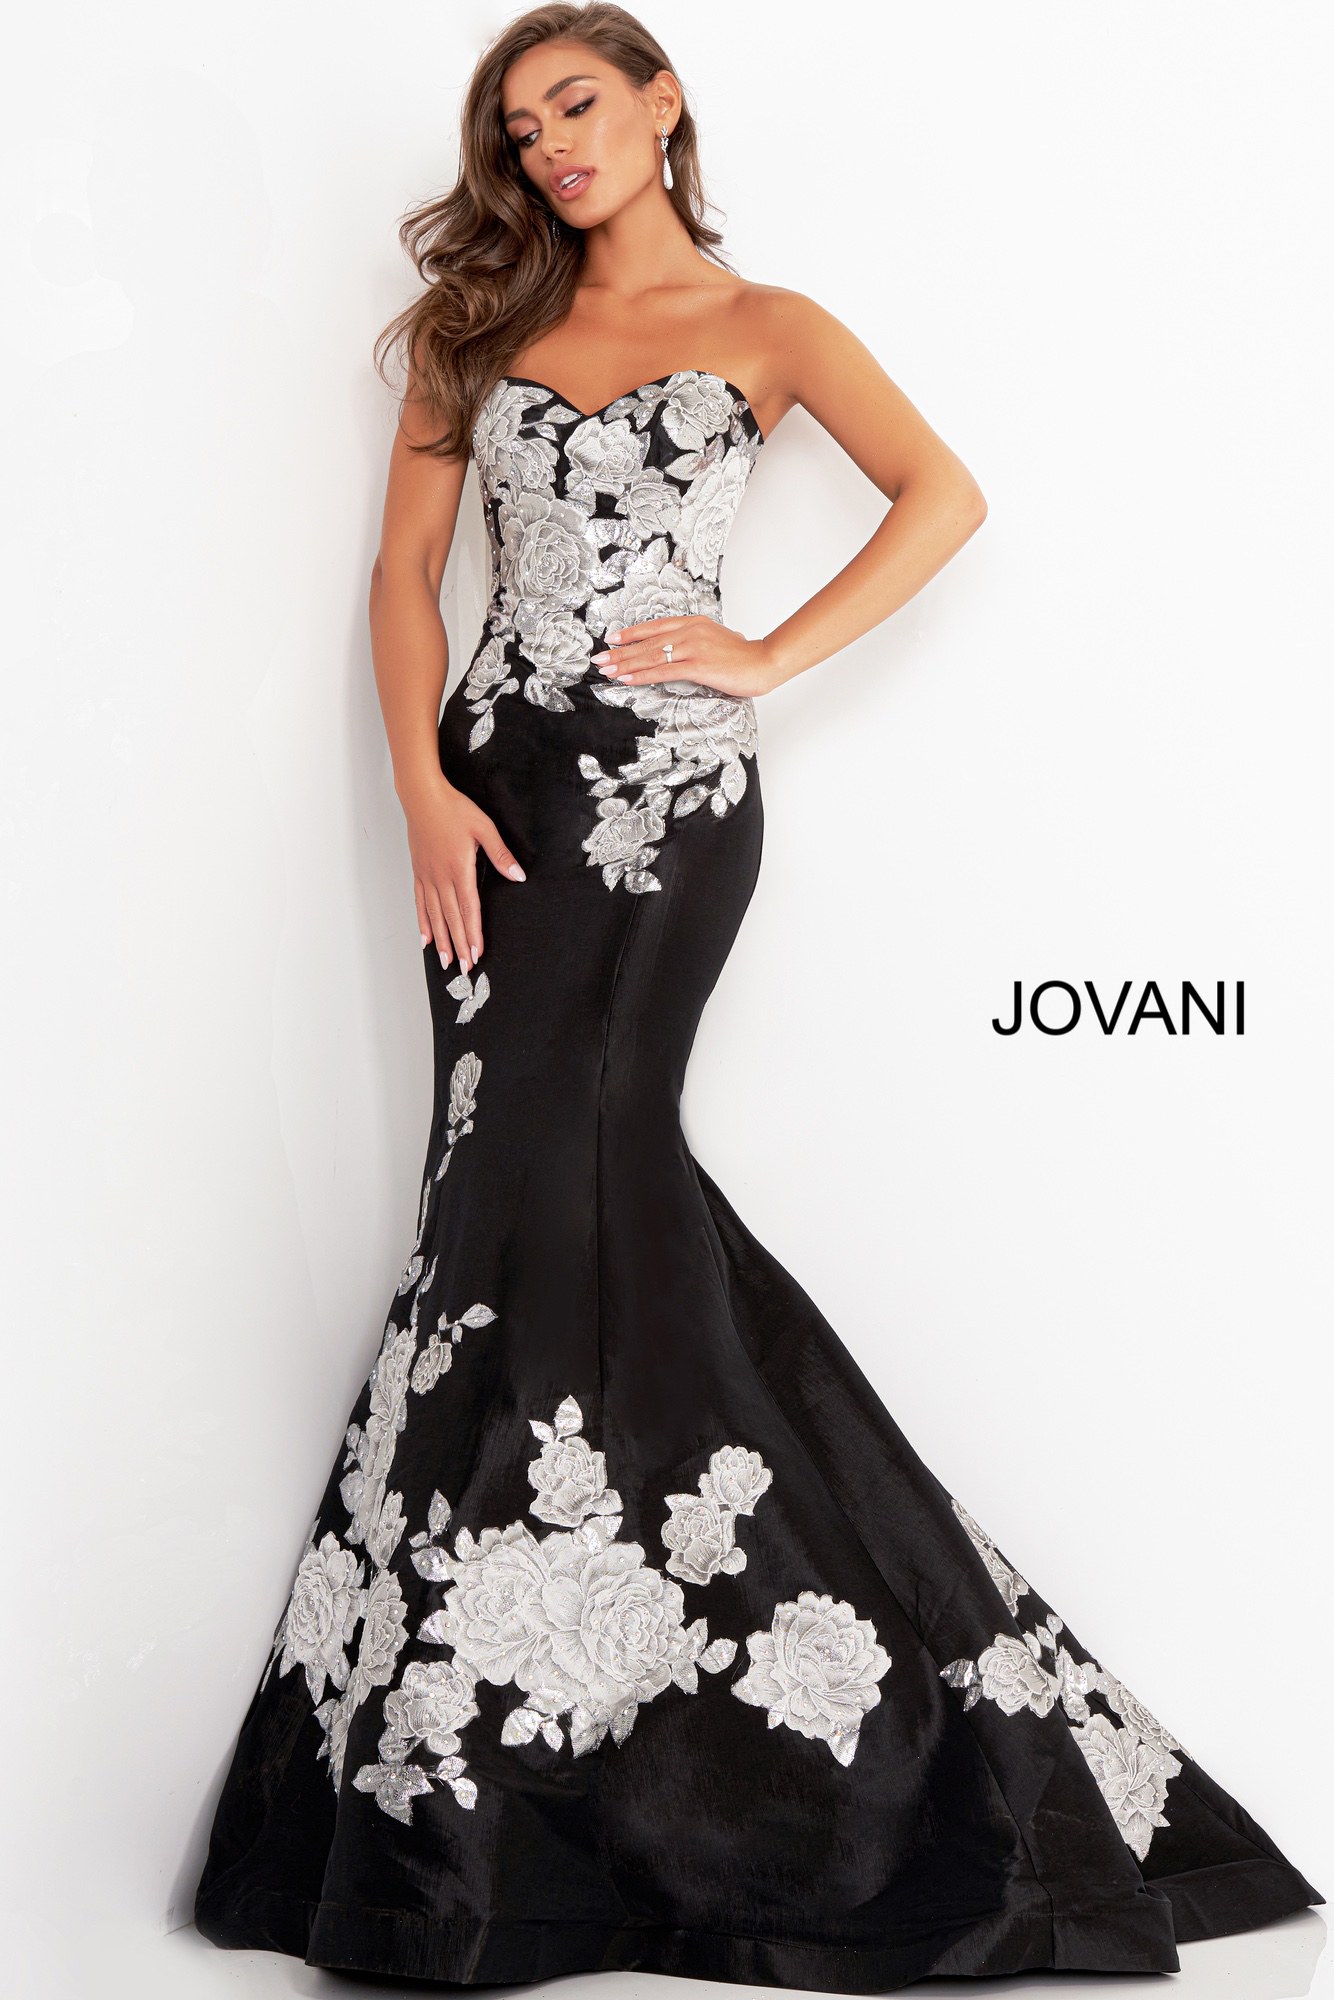 Jovani 3917 Black Silver Floral Mermaid Evening Dress